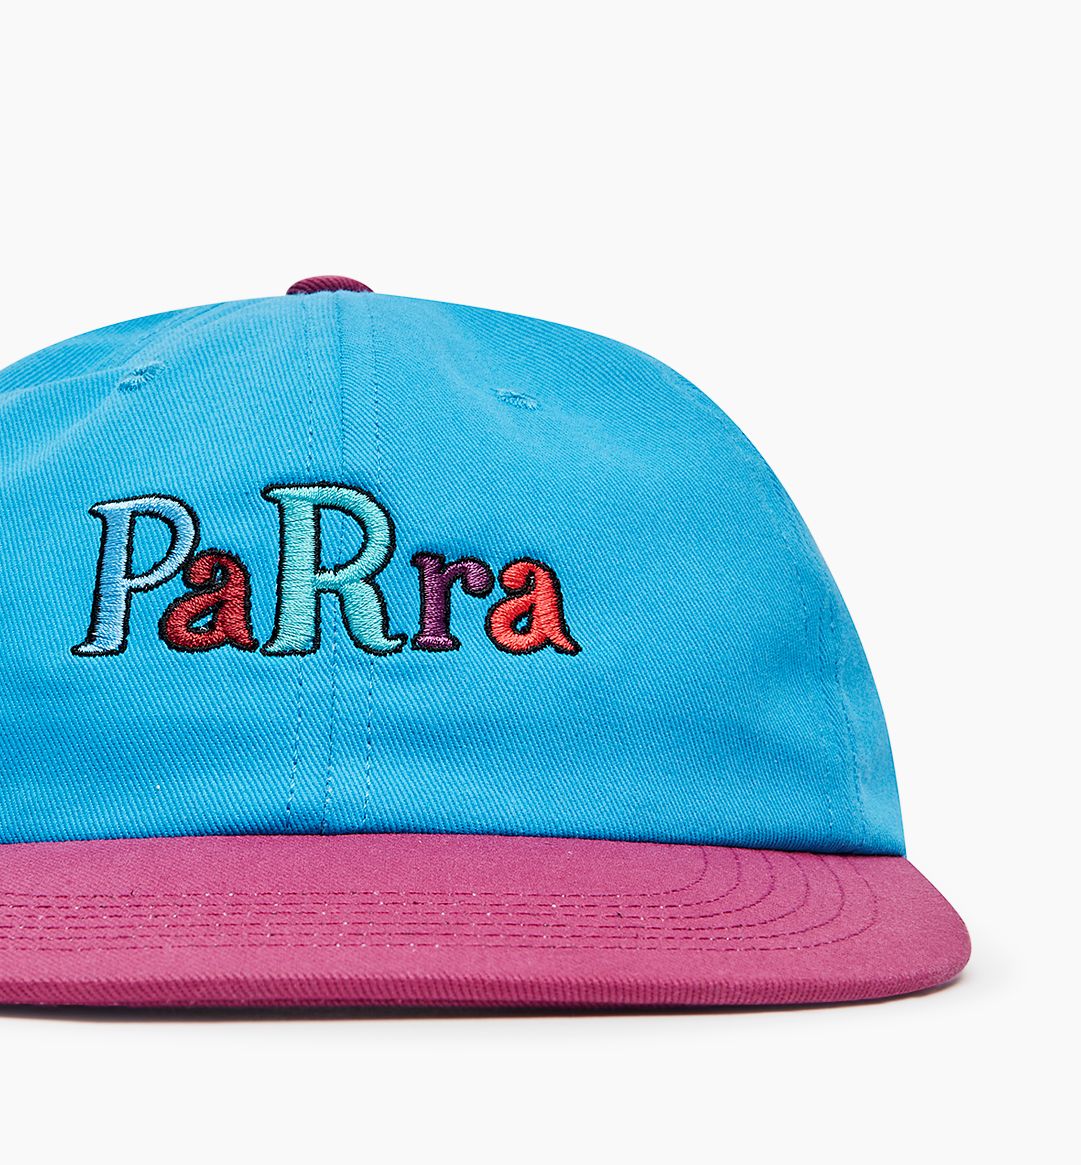 By Parra Serif Logo 6 Panel Hat